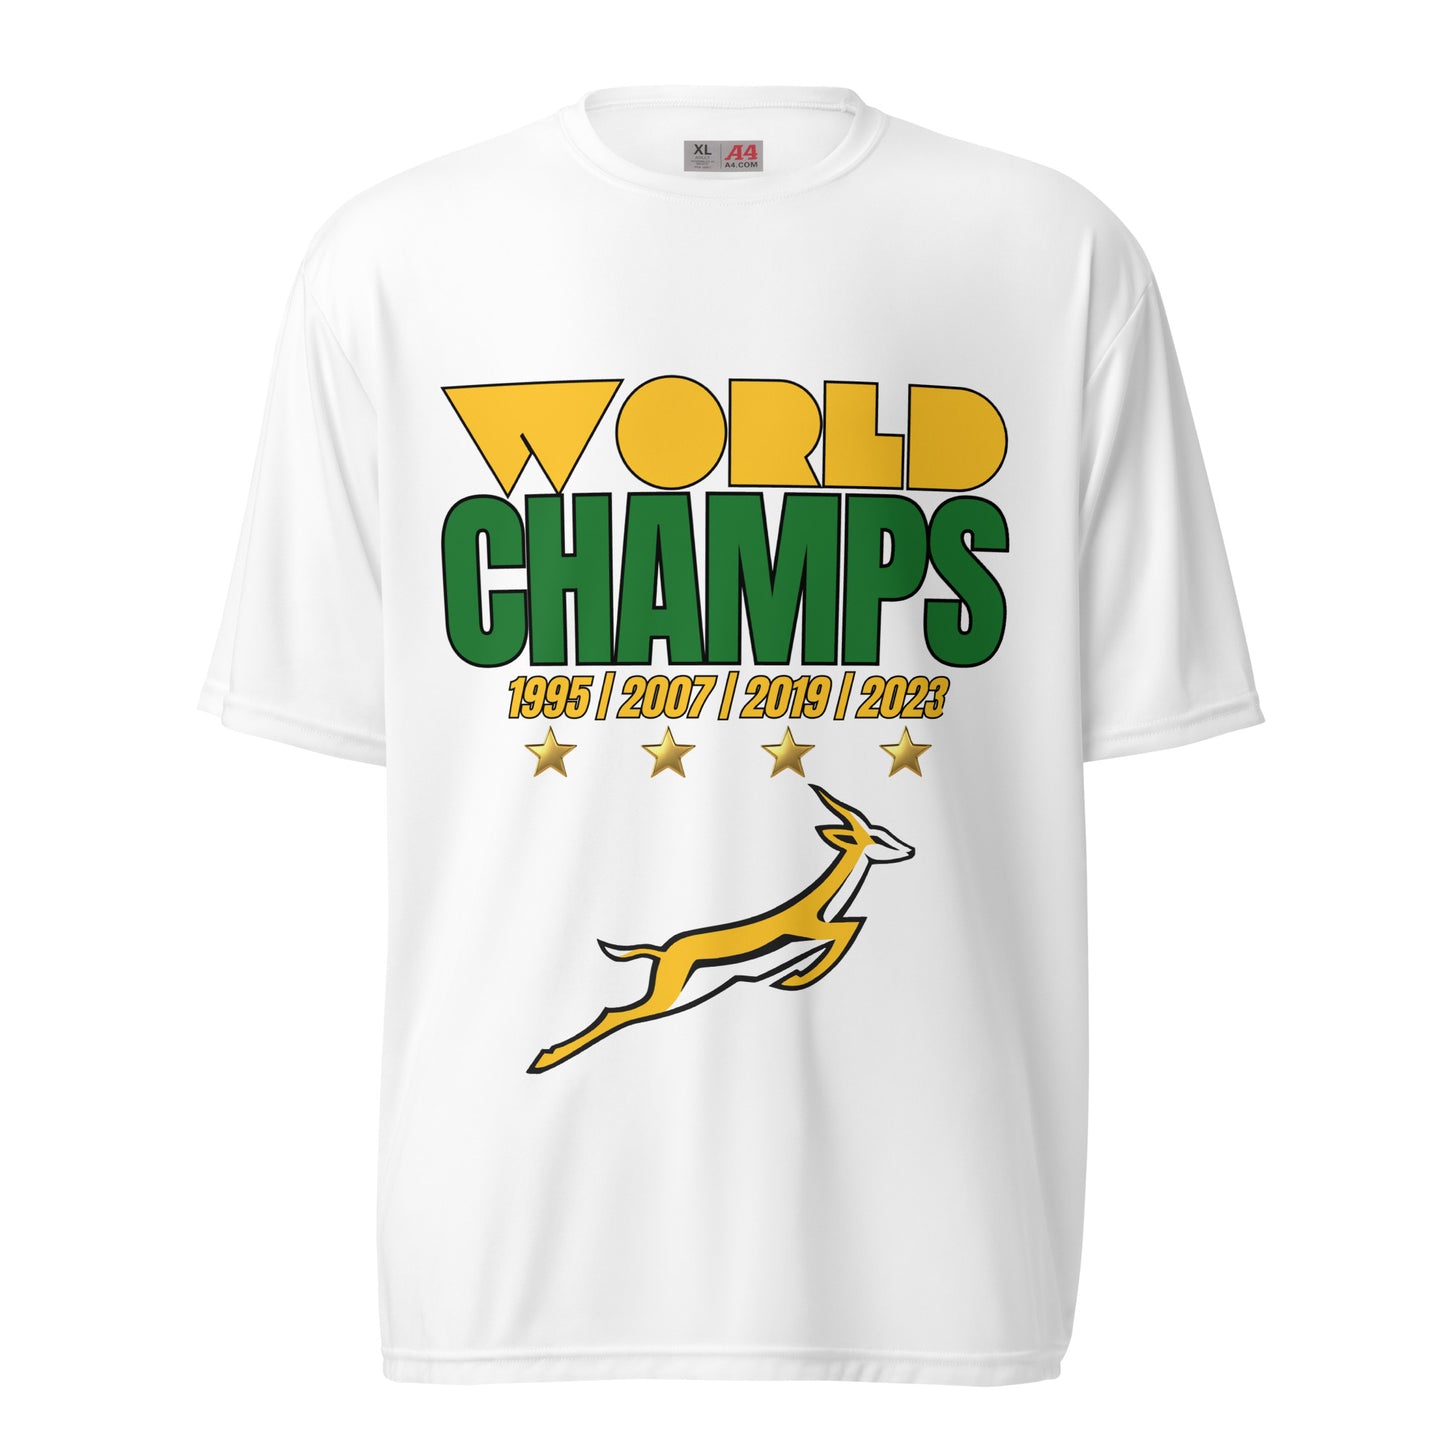 Unisex performance crew neck Springboks World Champs (Green/Gold) t-shirt